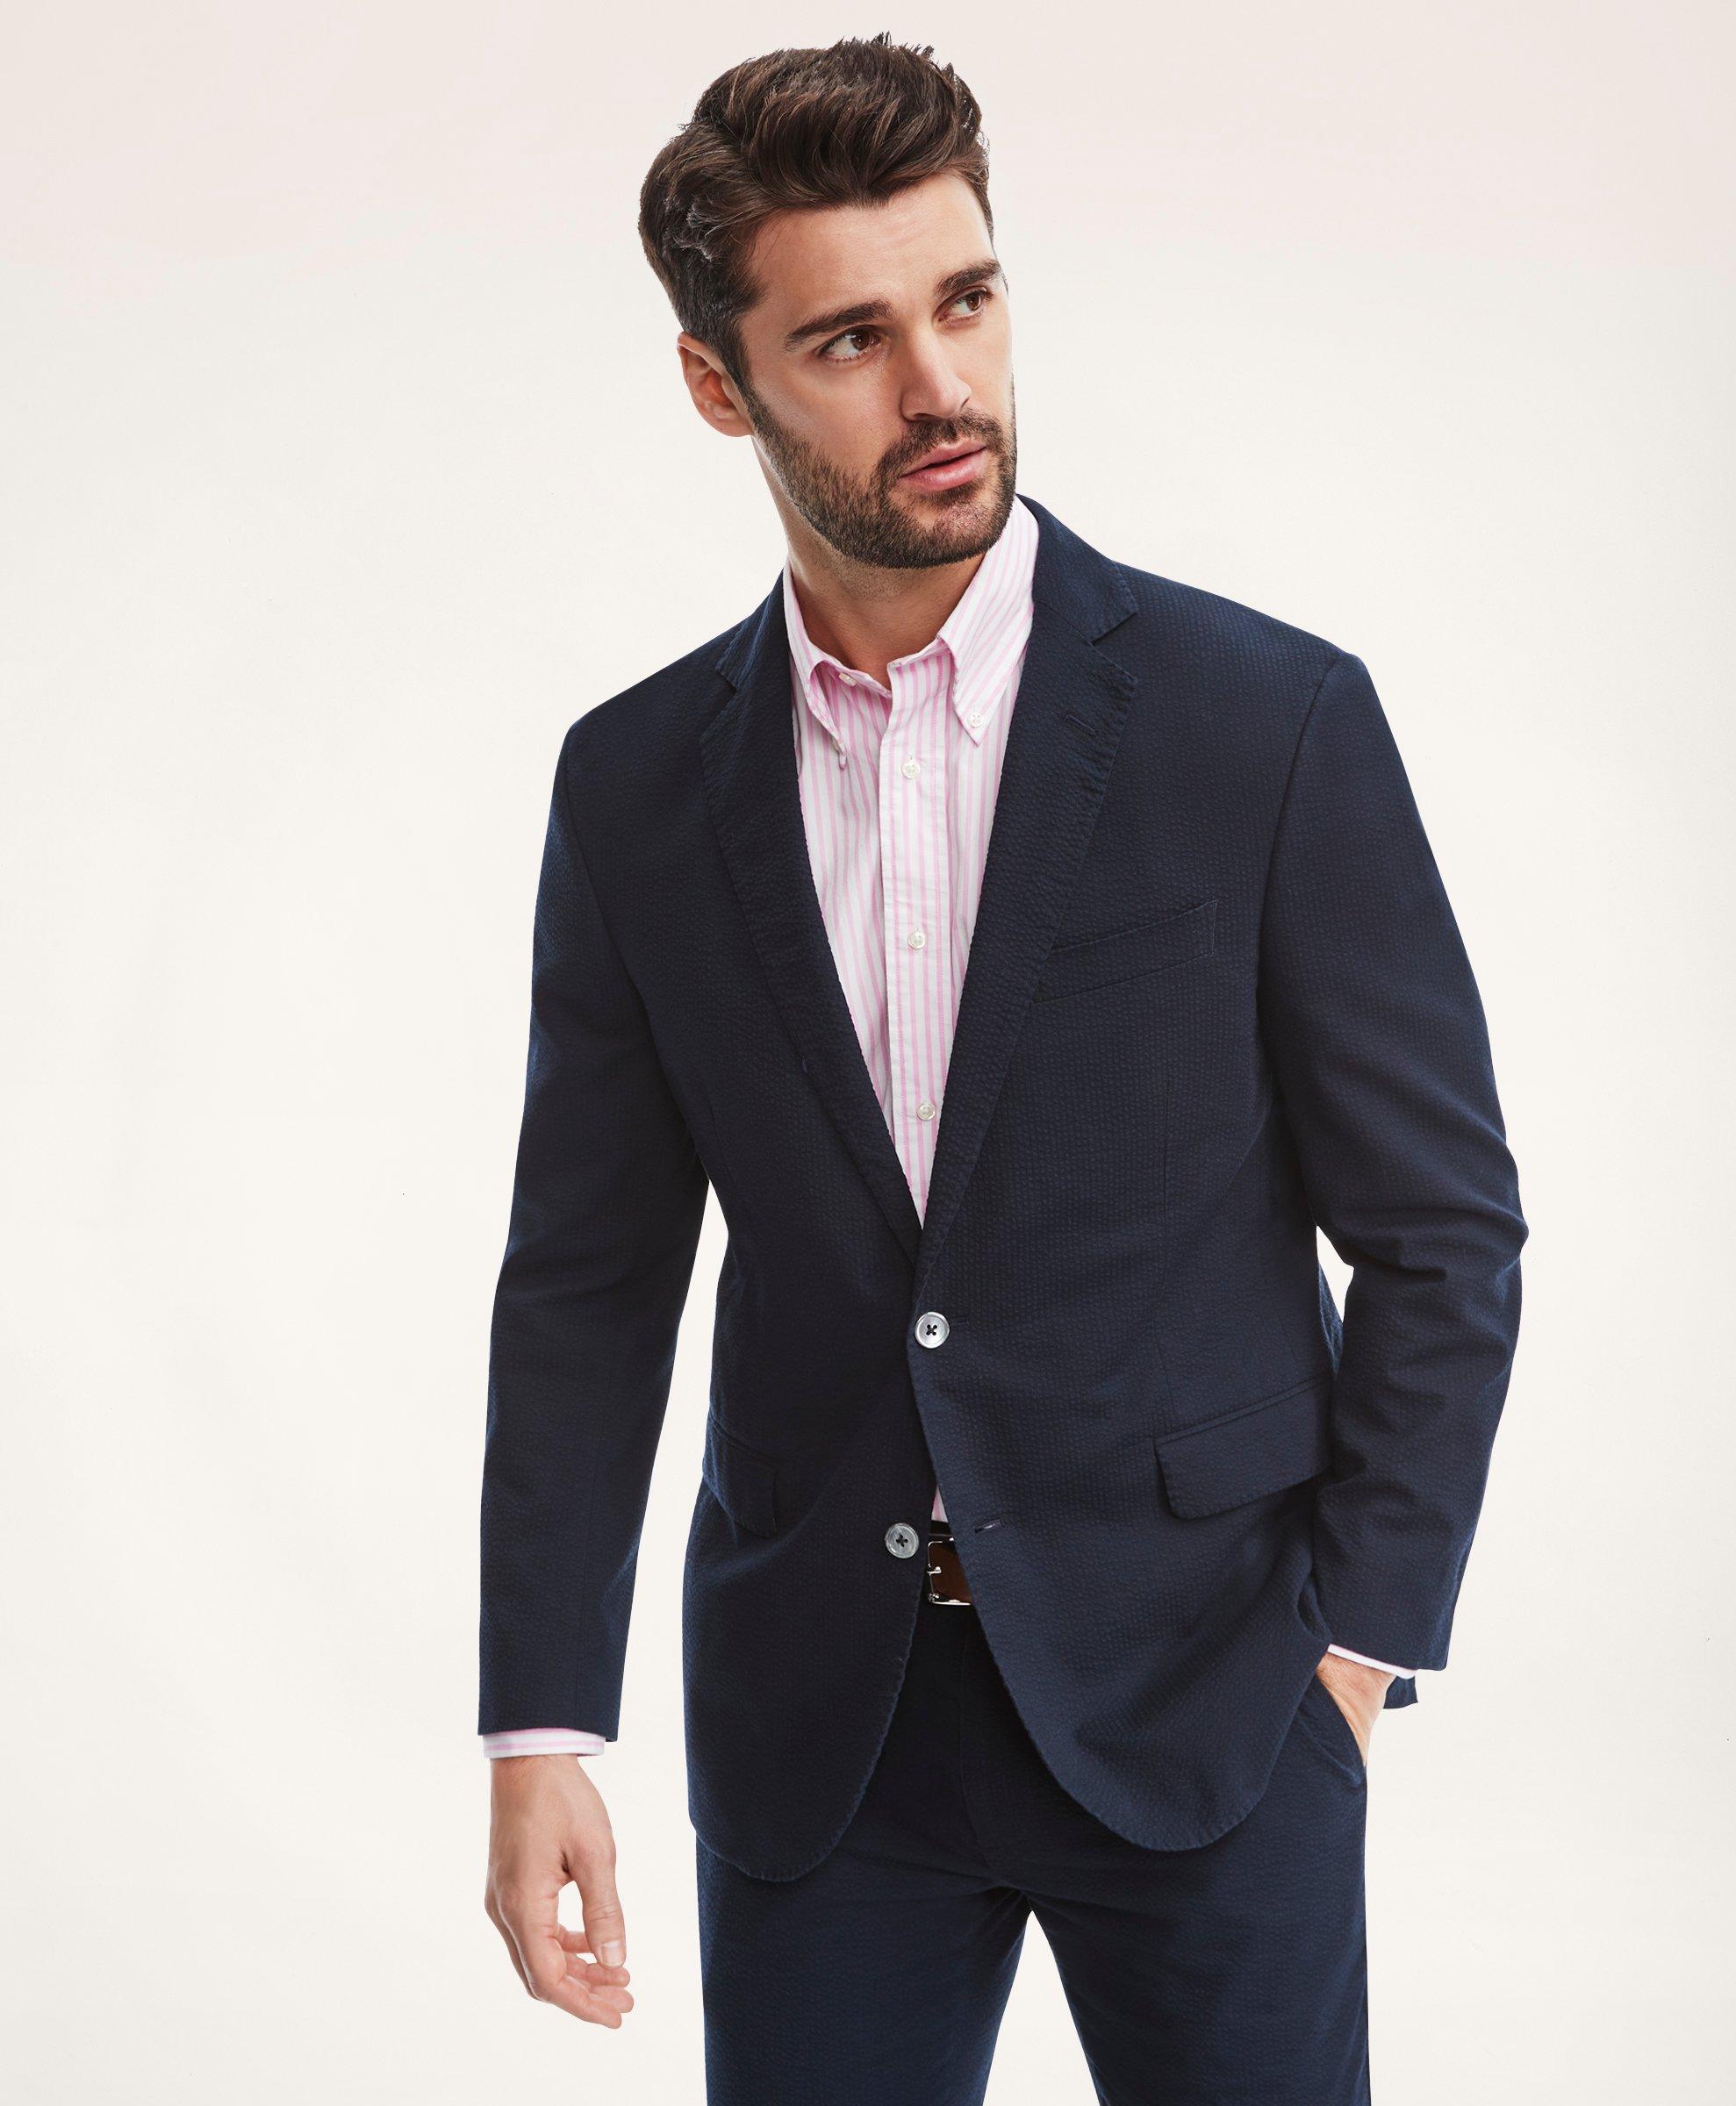 Spring Capsule Wardrobe For Men: 12 Important Pieces